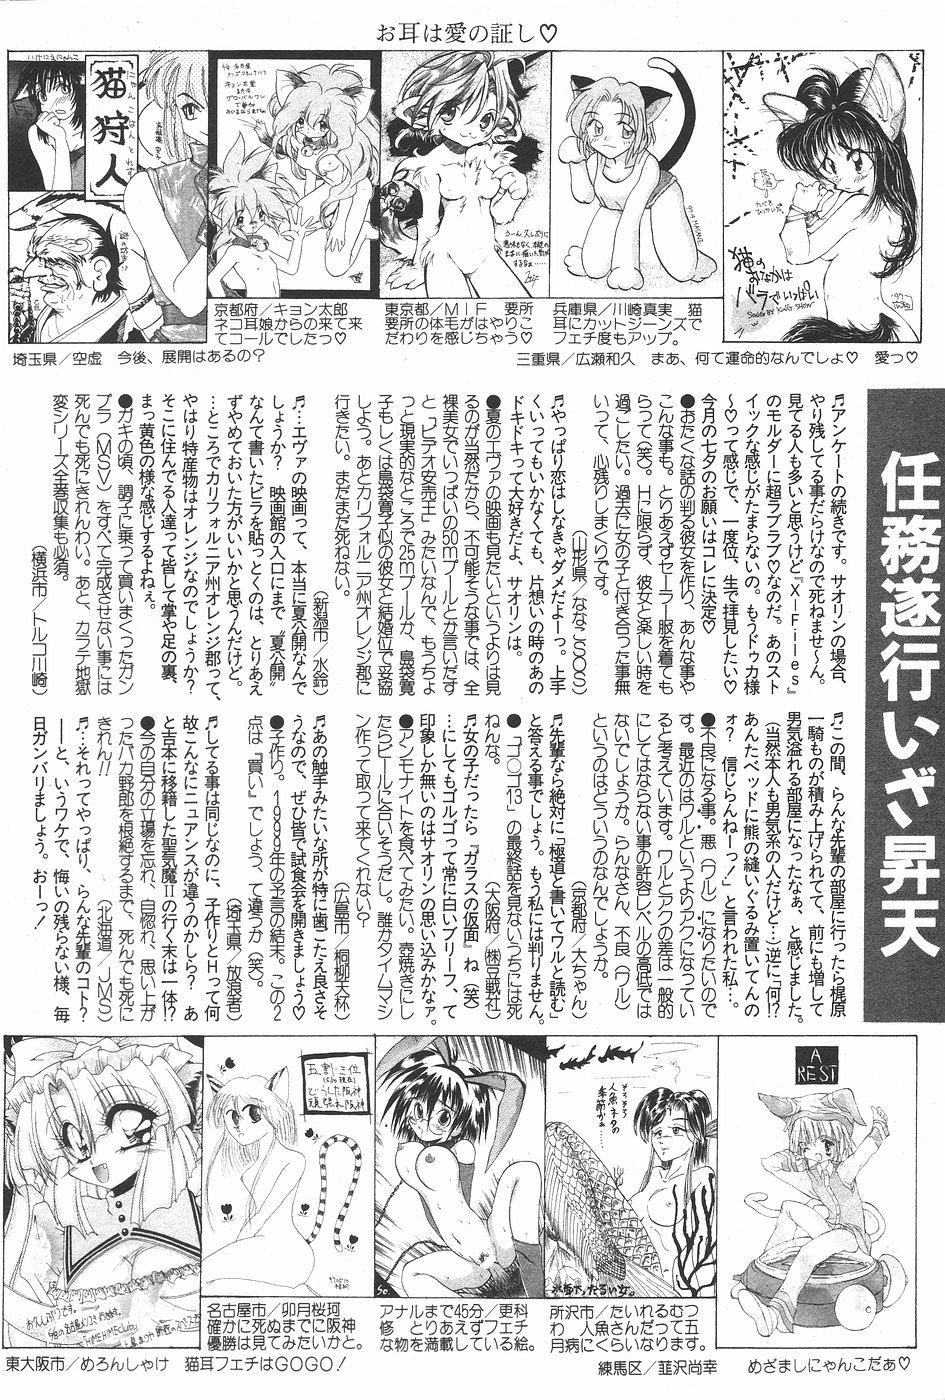 Manga Hotmilk 1997-07 175